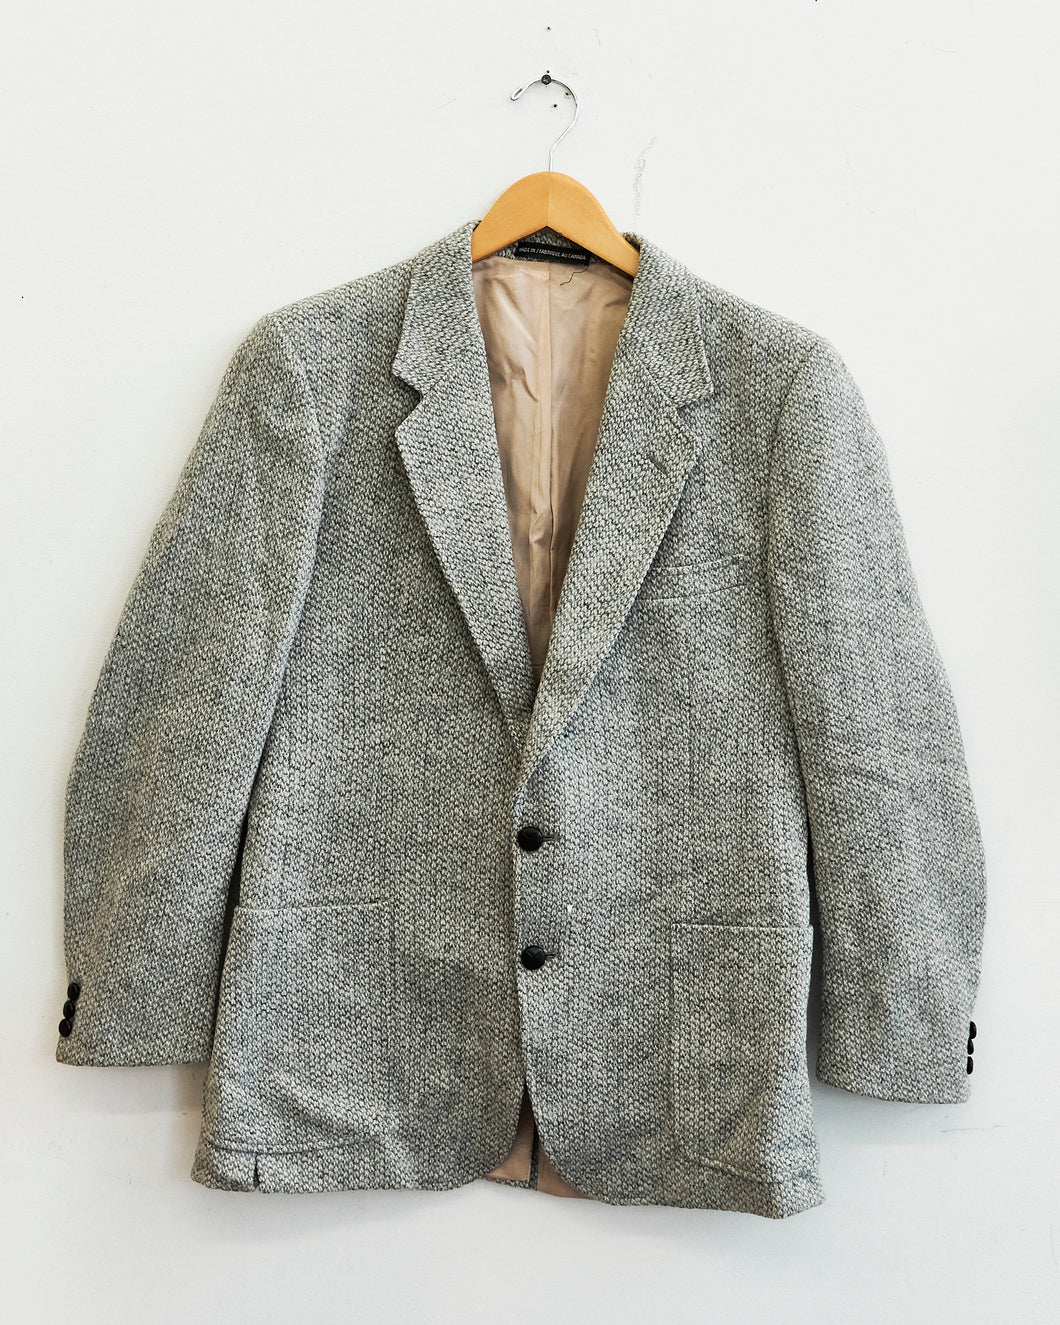 '70s/'80s Harris Tweed Blazer Jacket